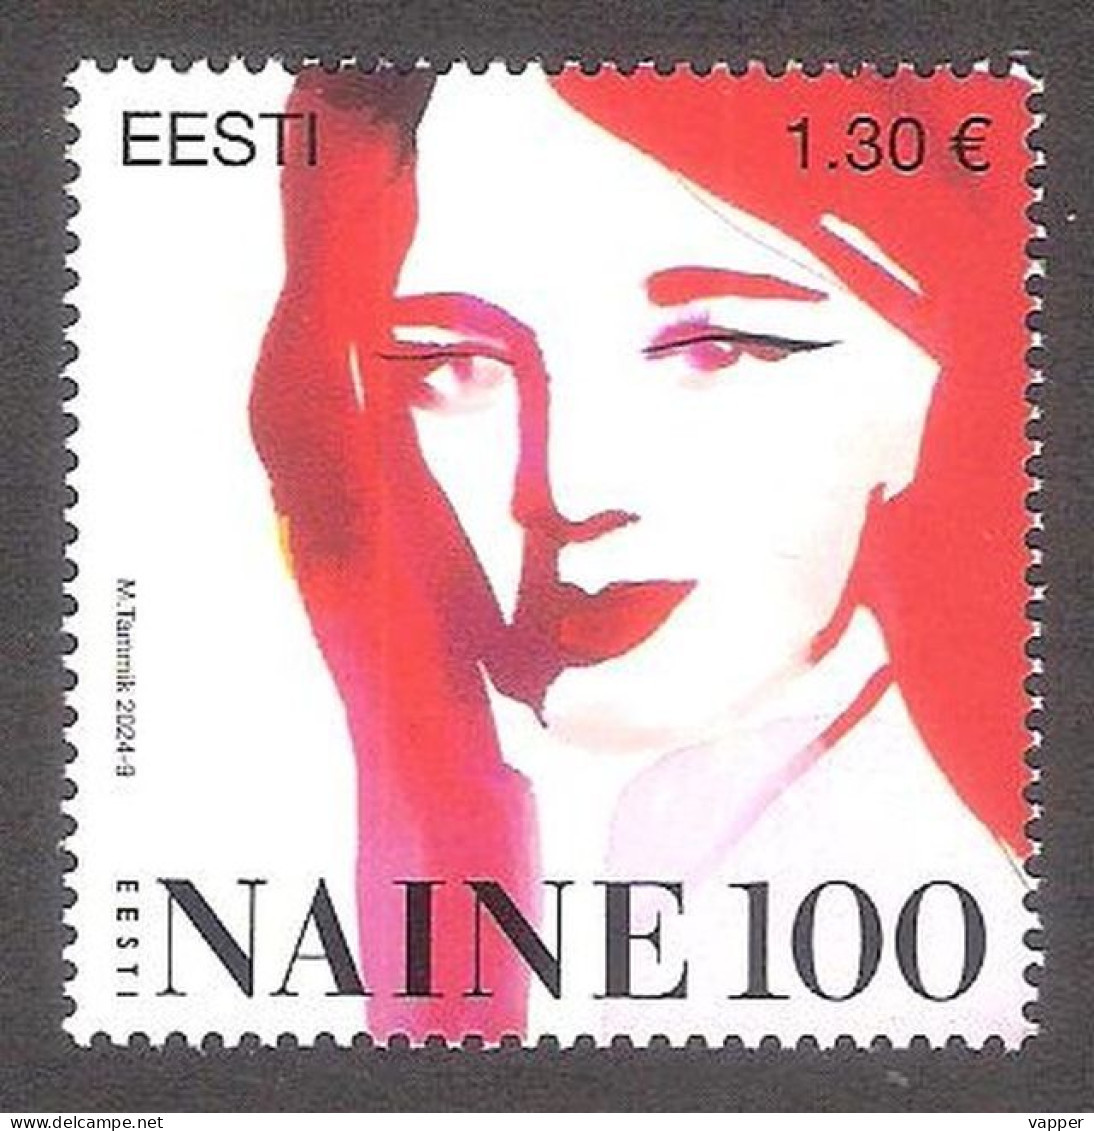 The Magazine Eesti Naine 100 Estonia 2024 MNH  Stamp  Mi 1102 - Estonia